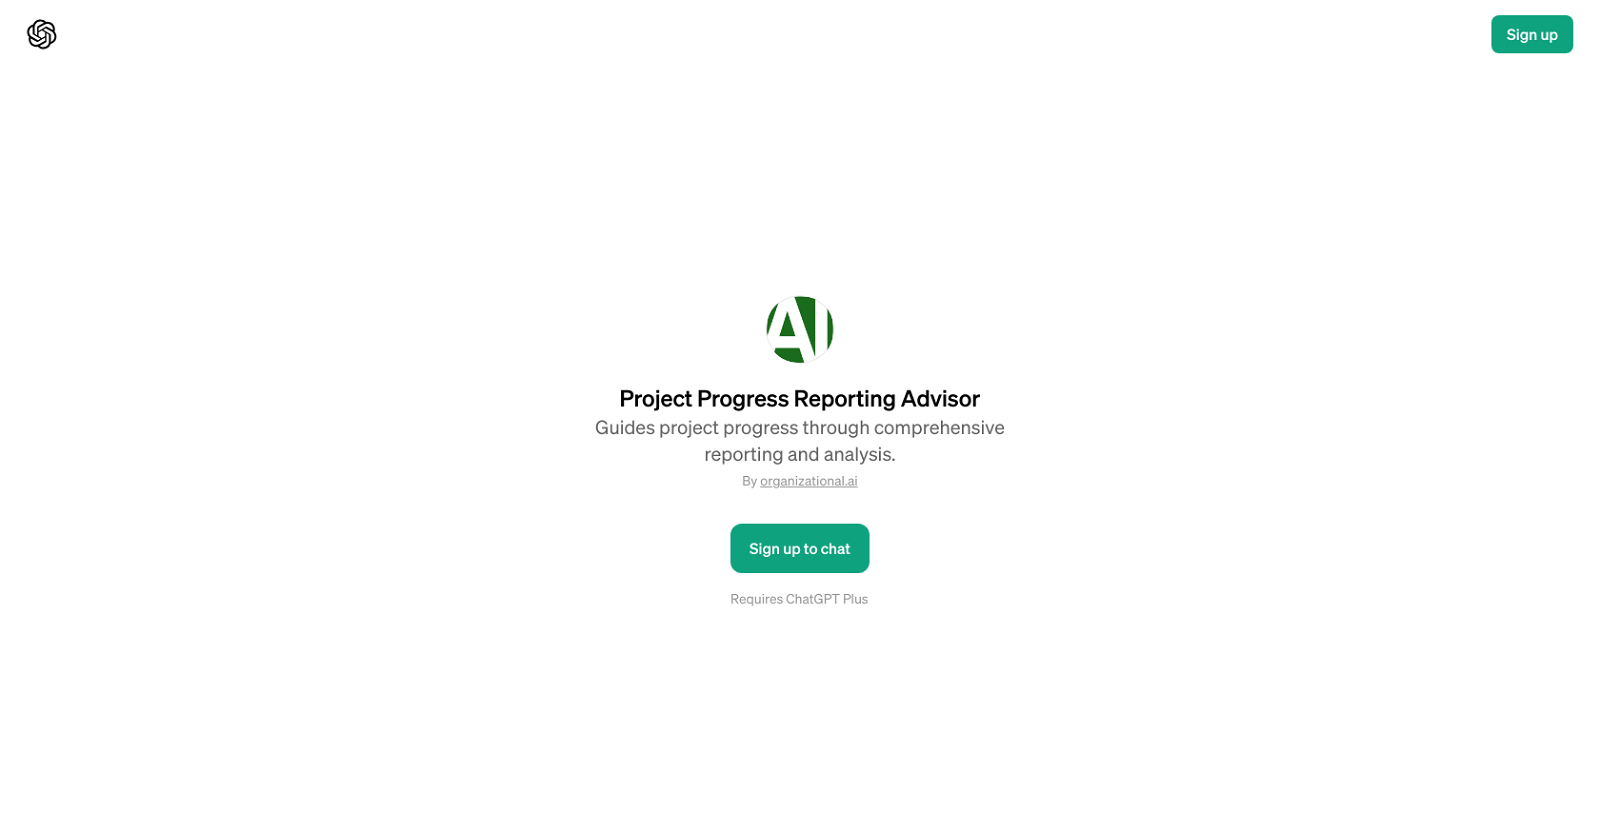 Project Progress Reporting Advisor website